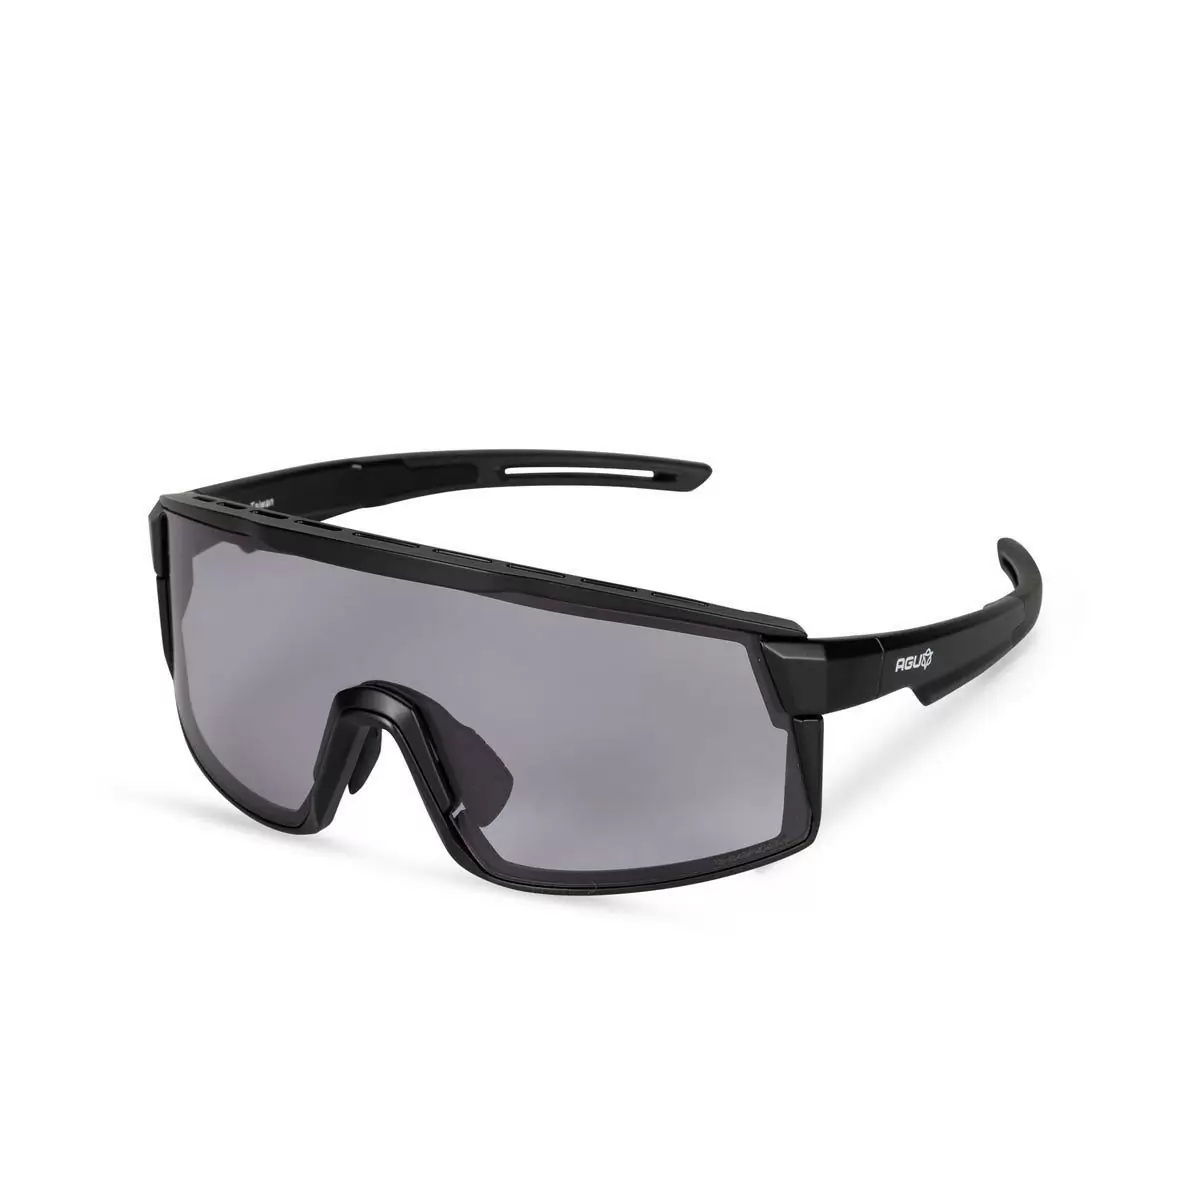 Sunglasses Bold Photochromic black - image